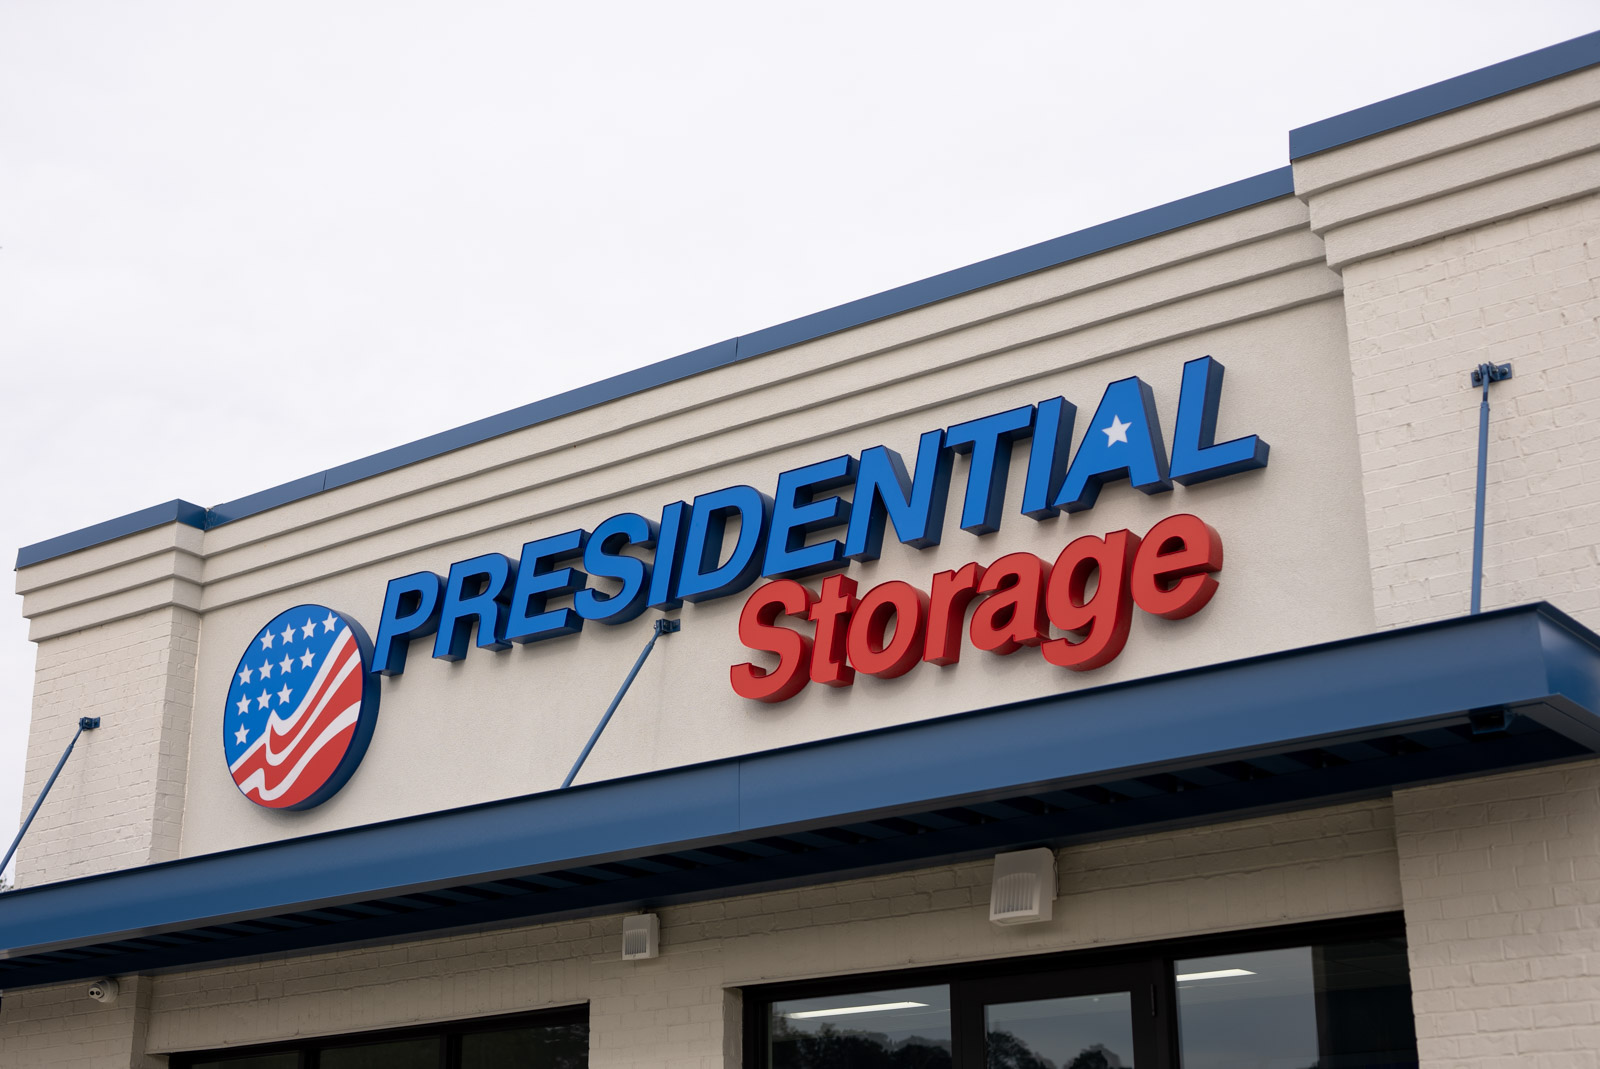 Presidential Storage 1